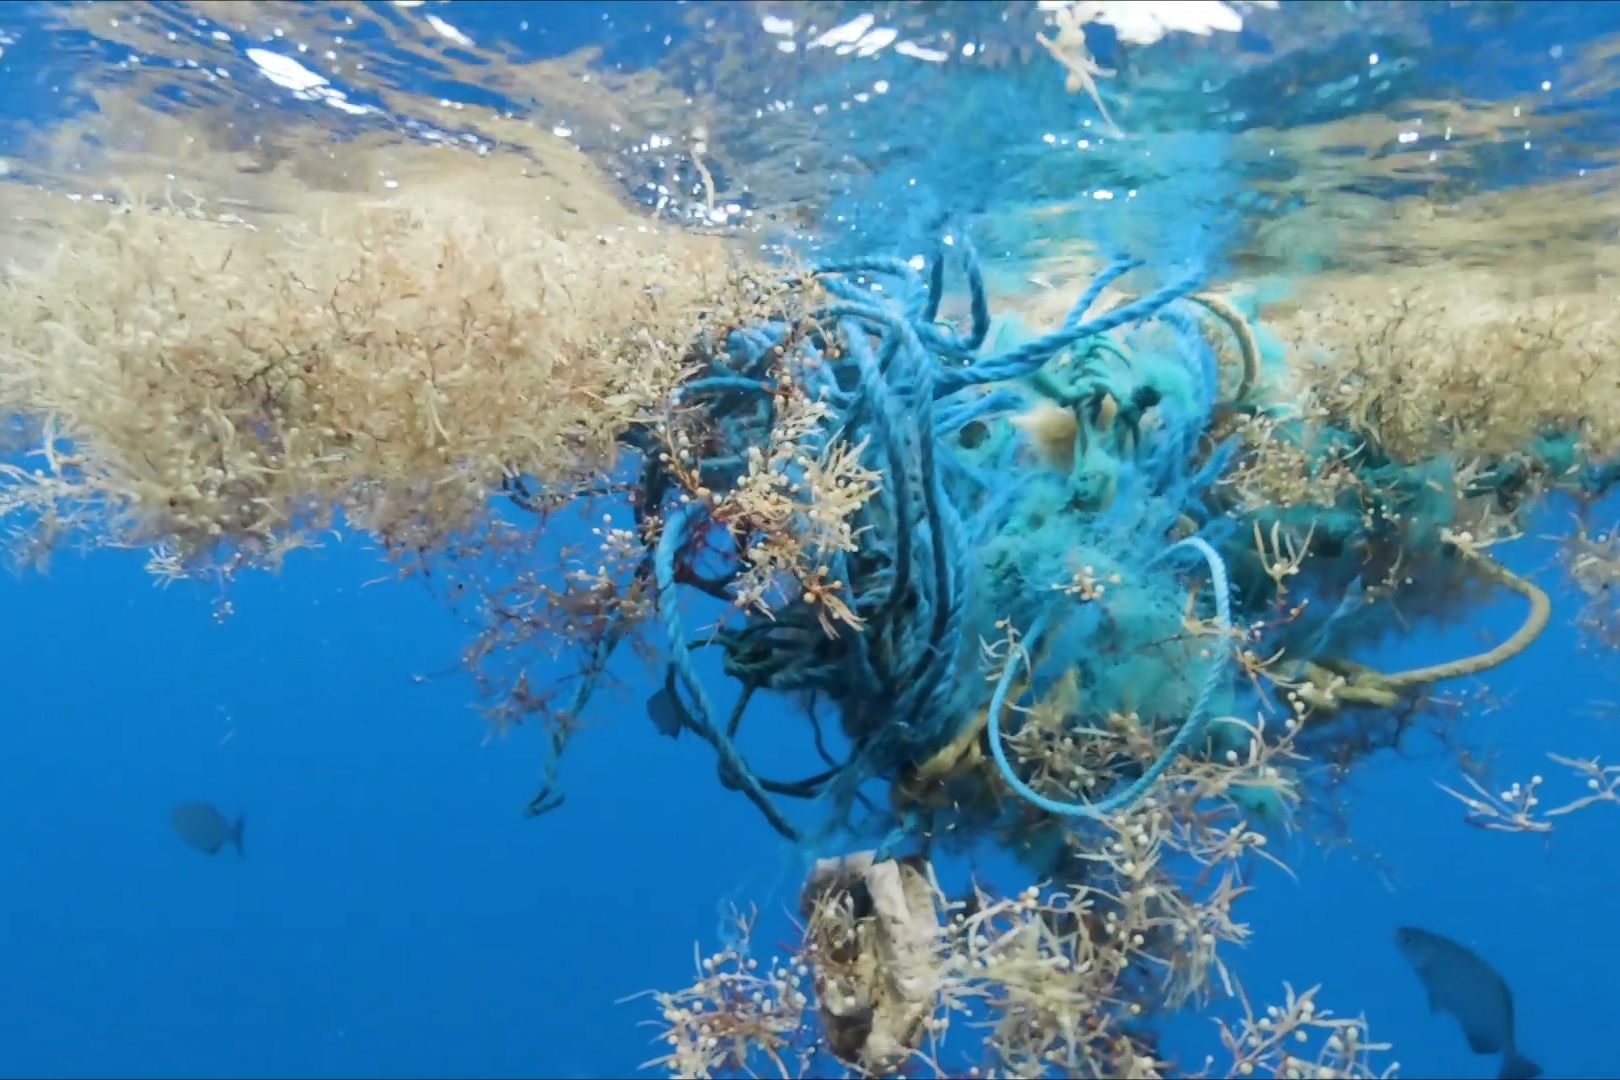 Microplastics found in the Sargasso Sea | CNN